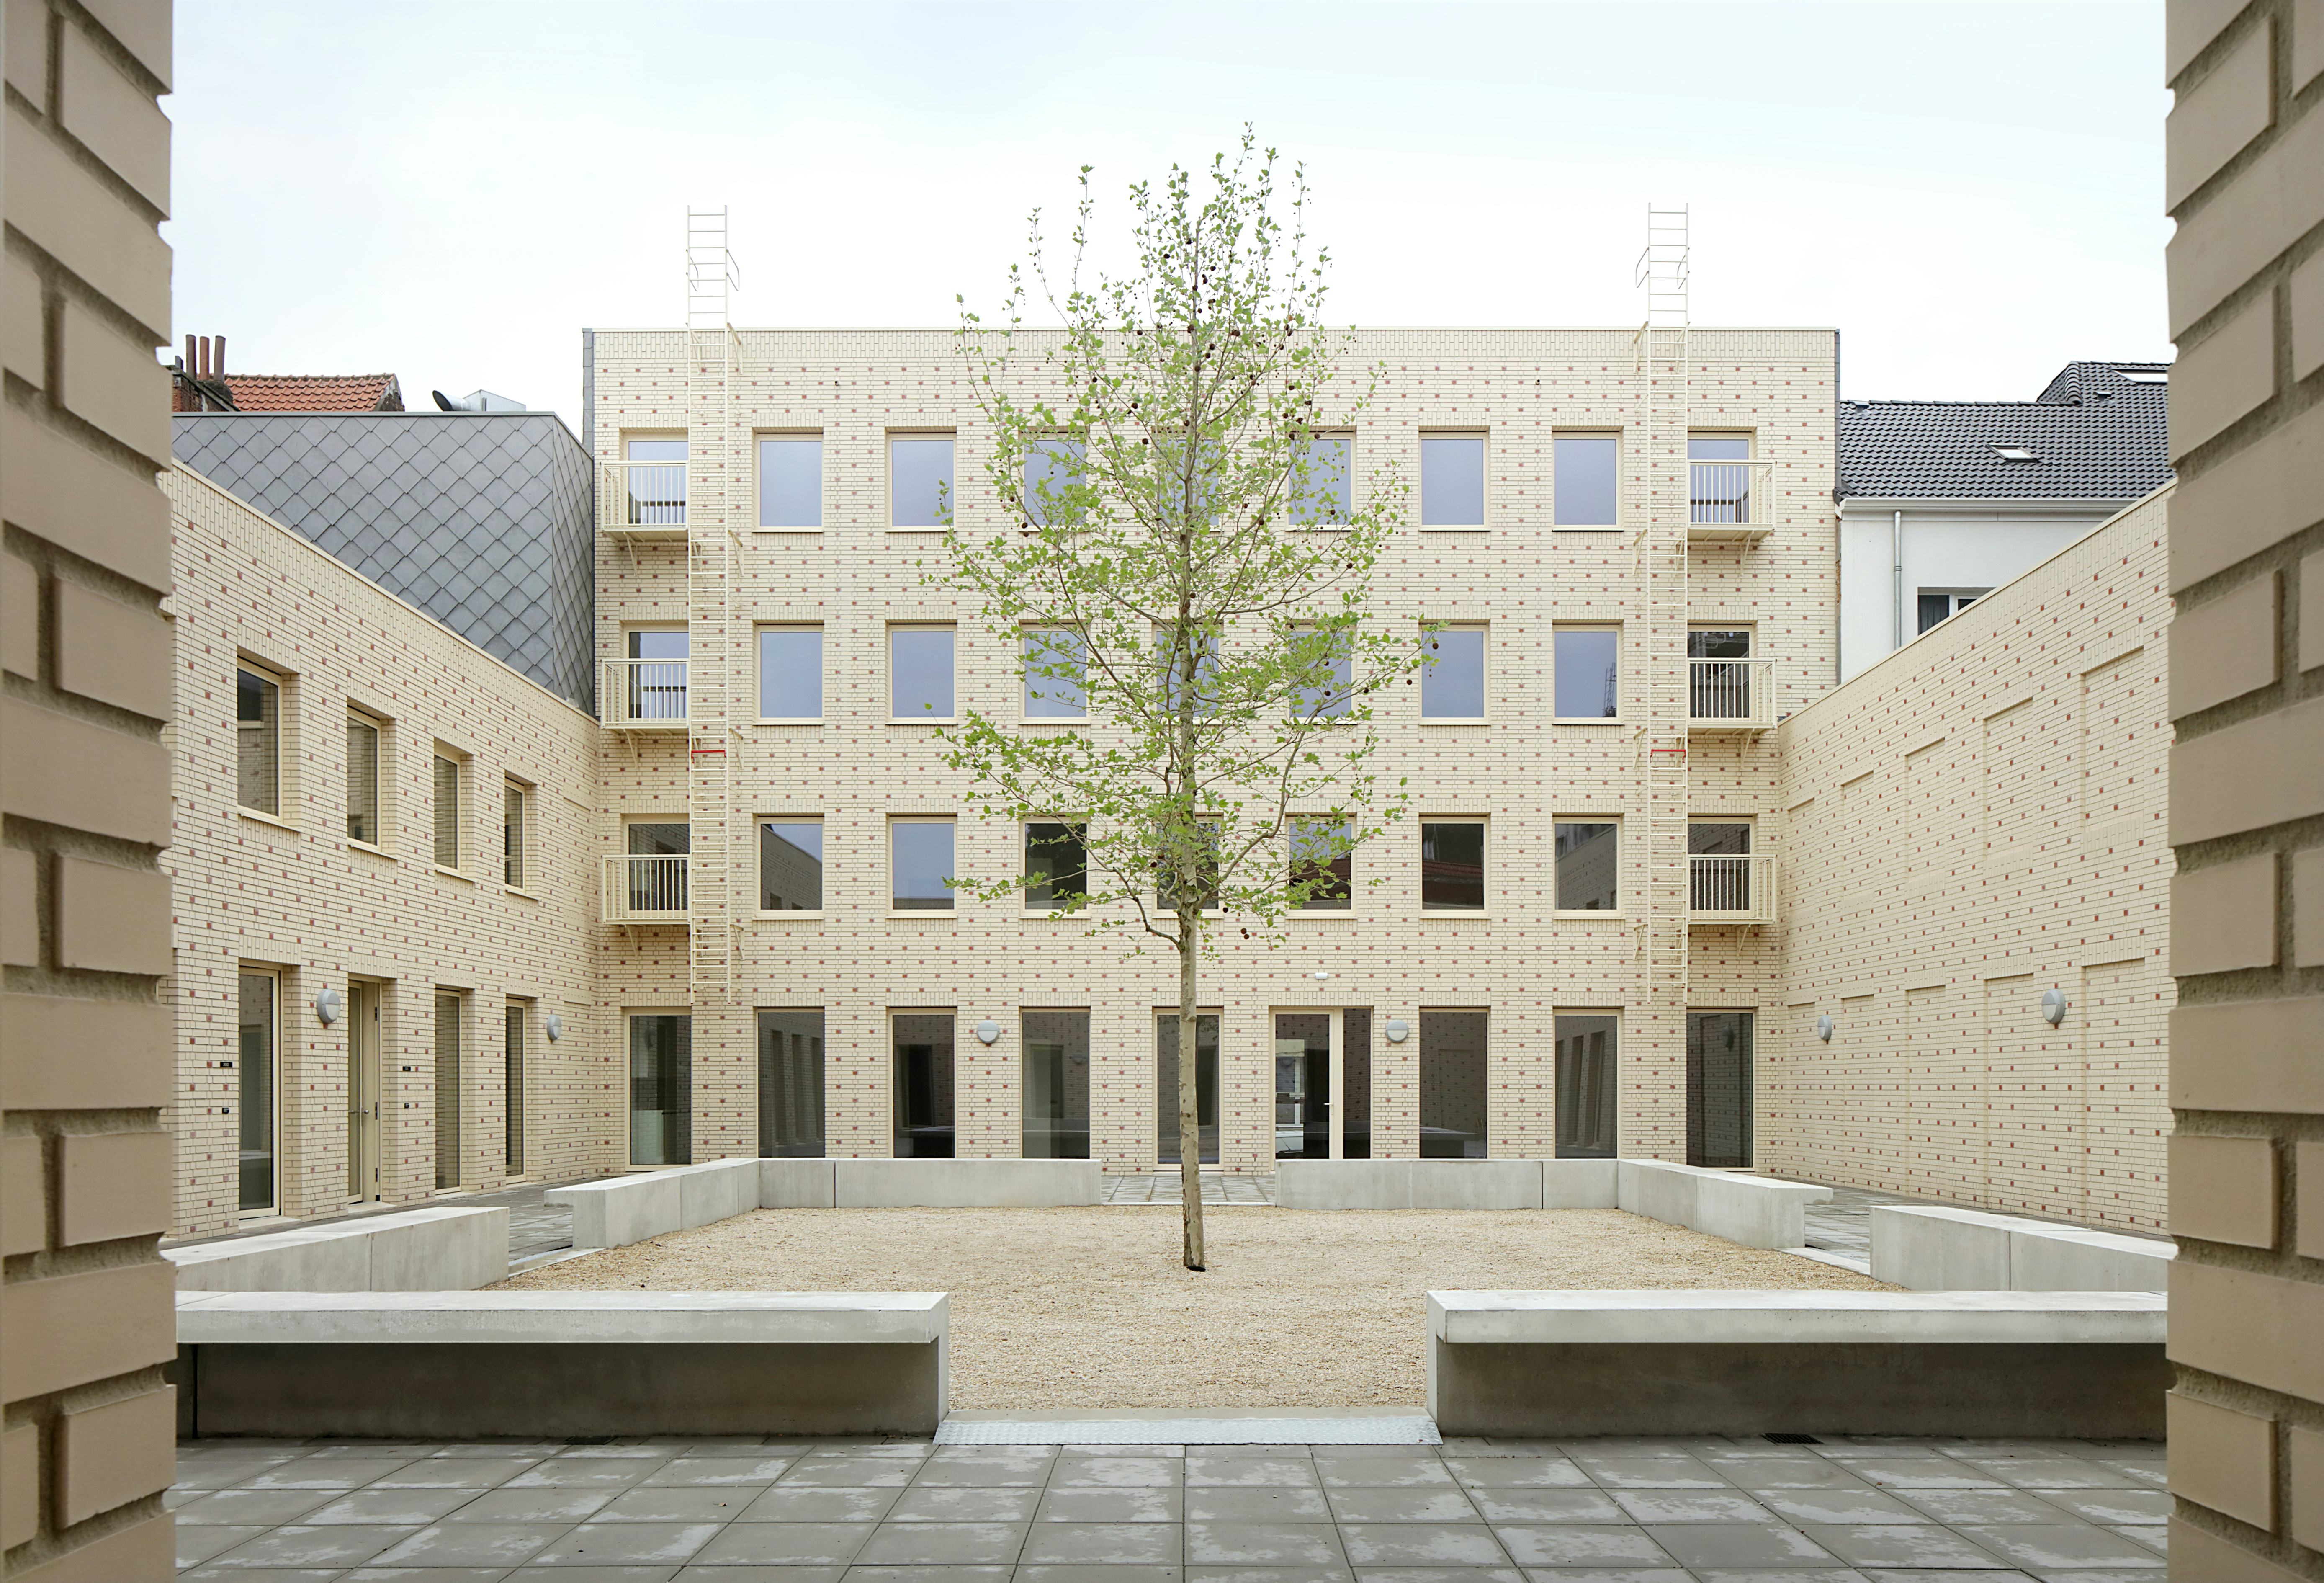 Sociale woningen Klapdorp, Antwerpen, META architectuurbureau, beeld Filip Dujardin